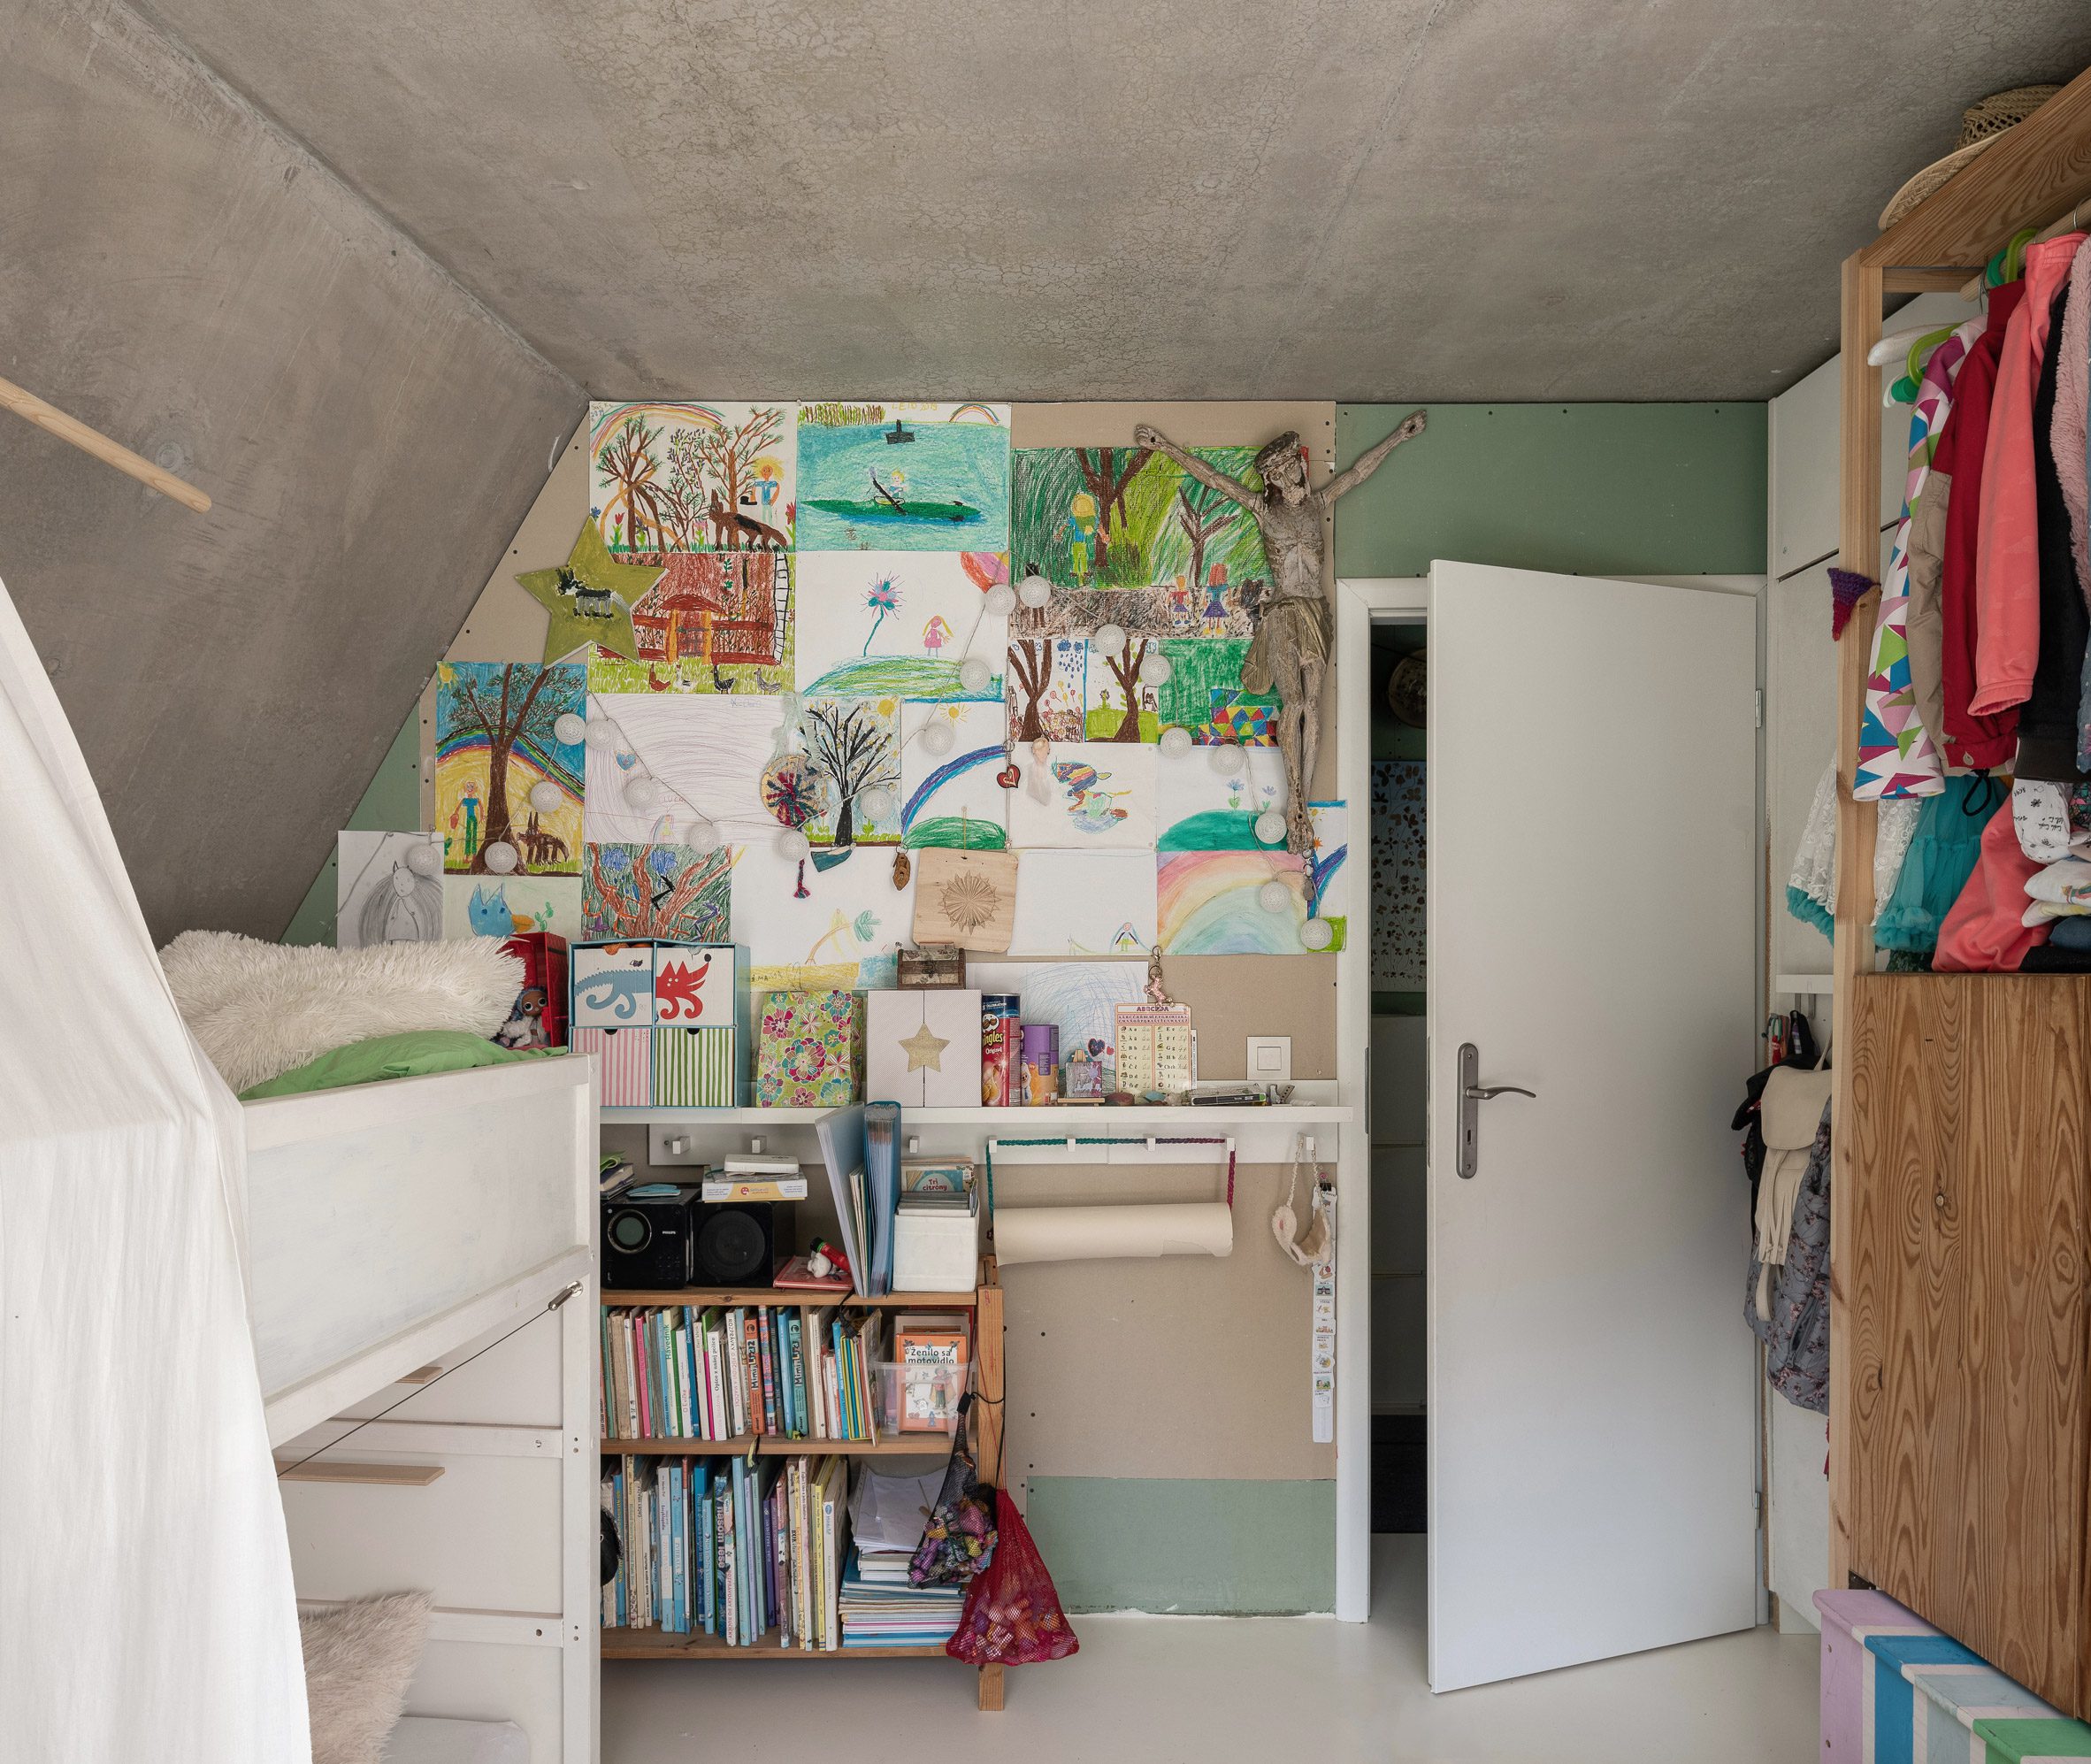 Child's bedroom interior